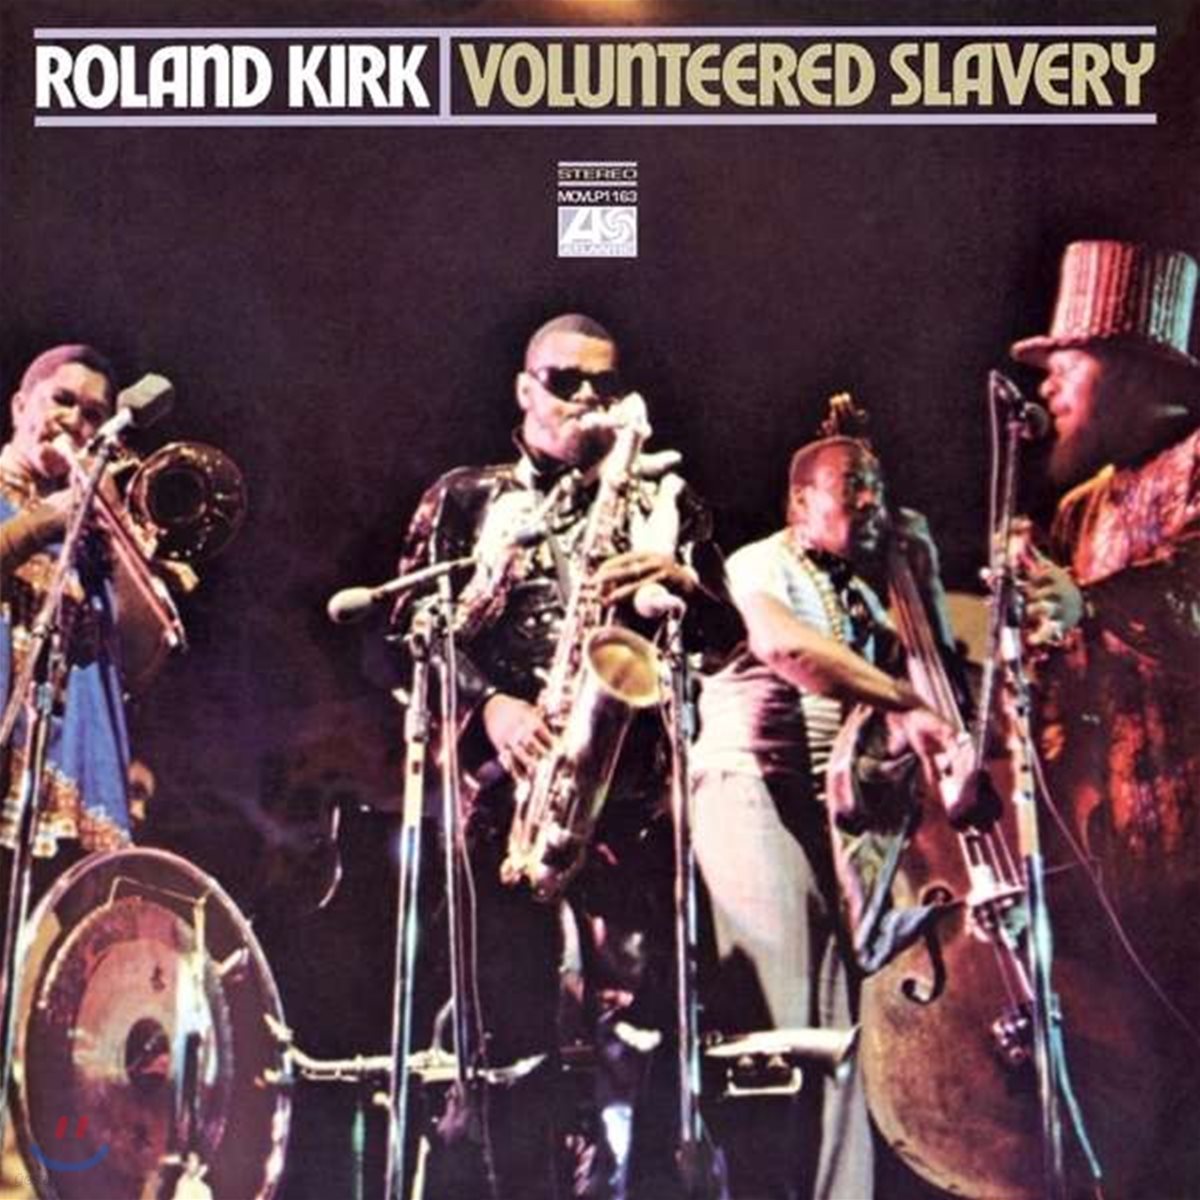 Roland Kirk (롤랜드 커크) - Volunteered Slavery [LP]